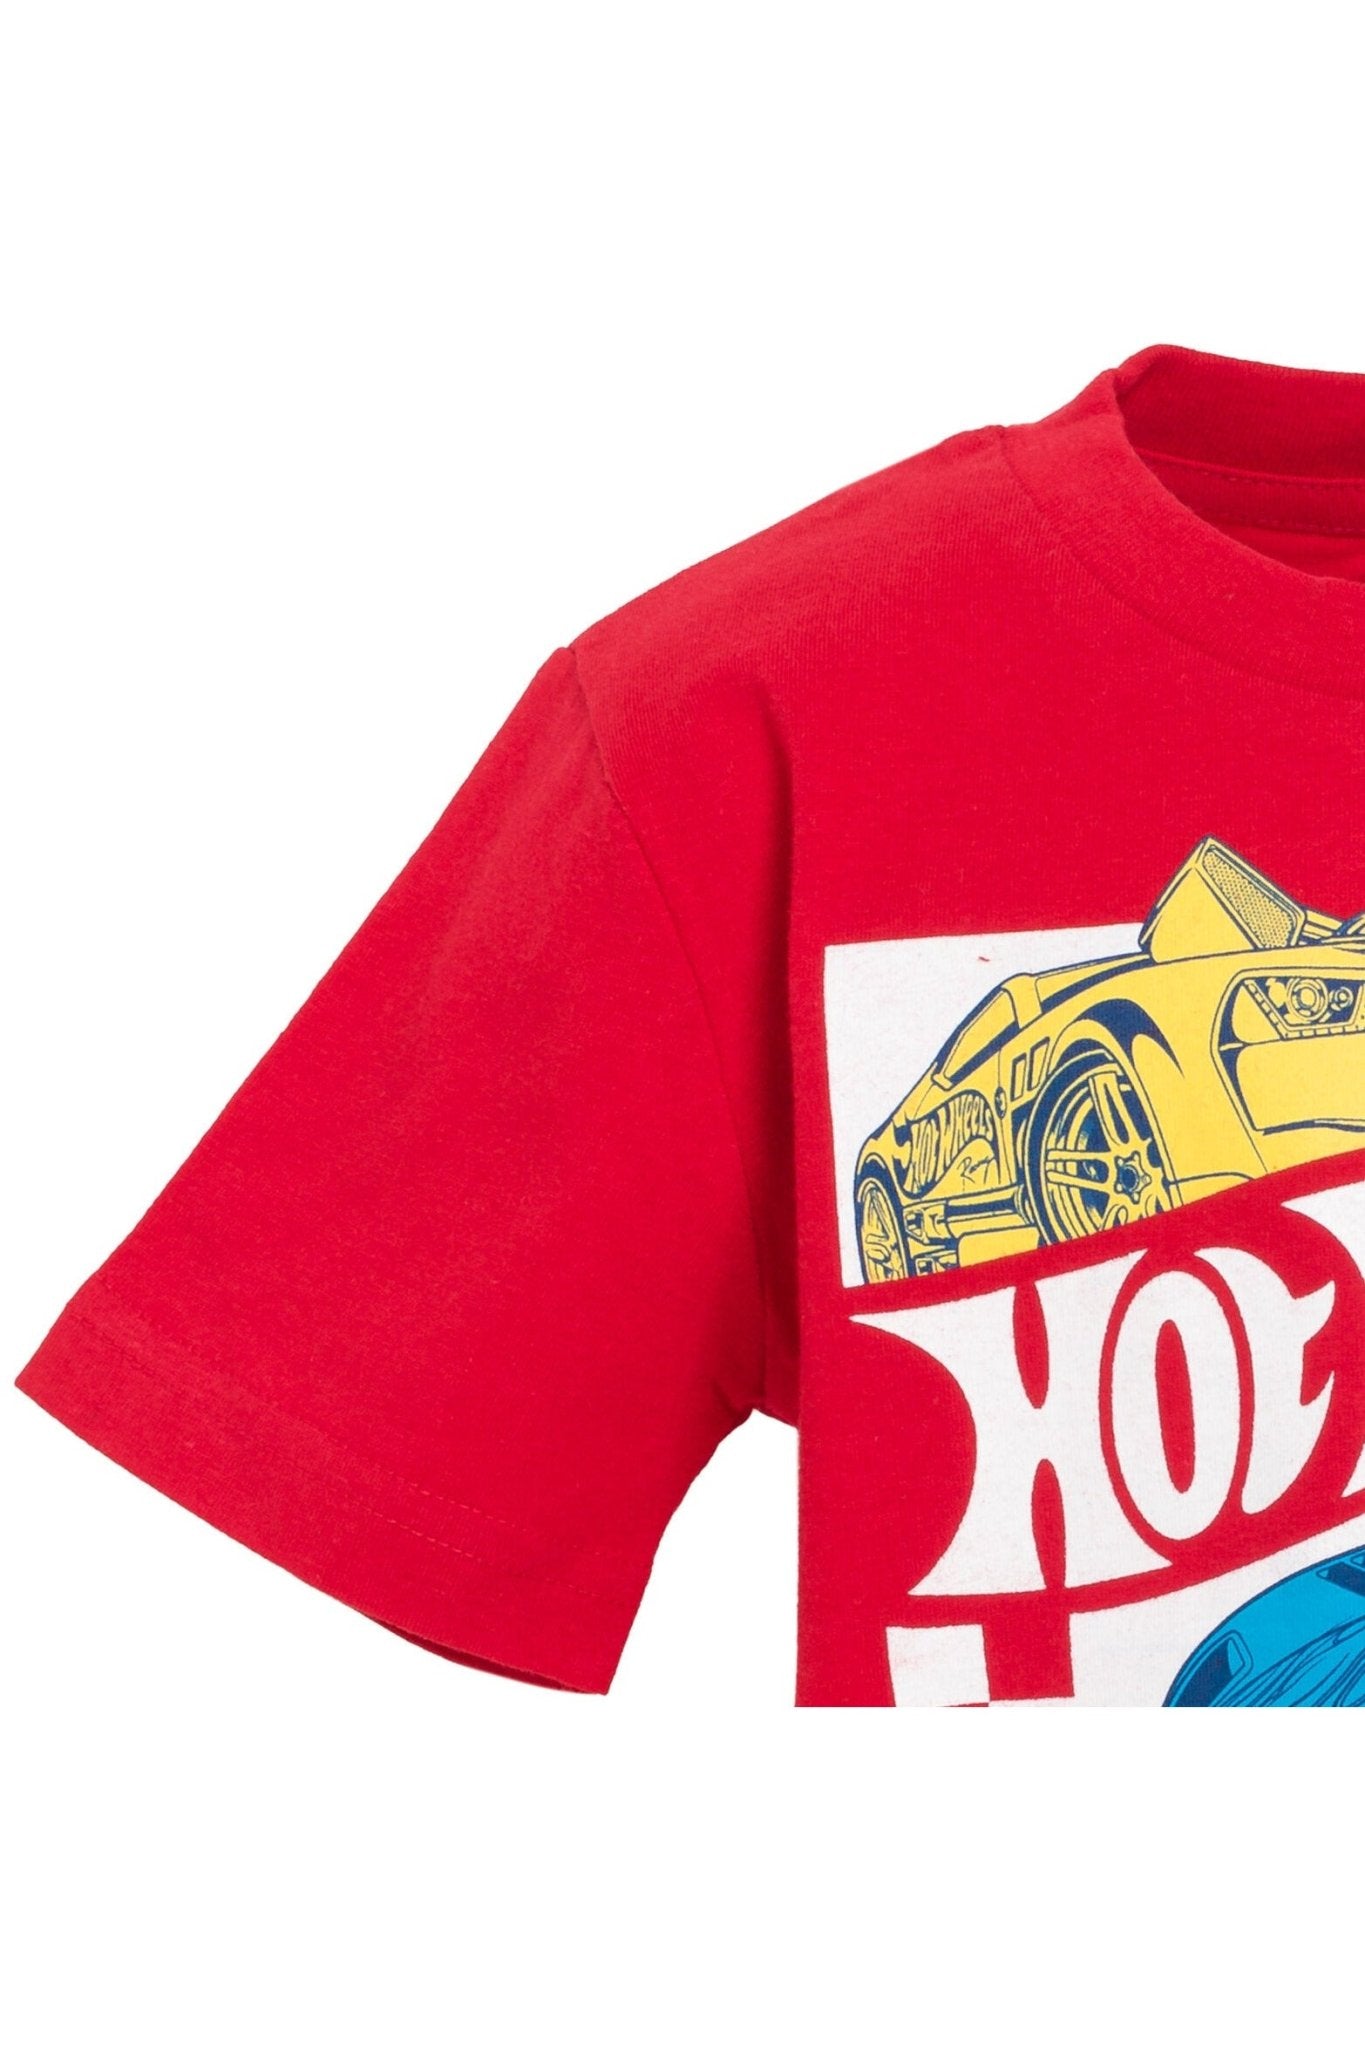 Hot Wheels Short Sleeve Graphic T-Shirt - imagikids